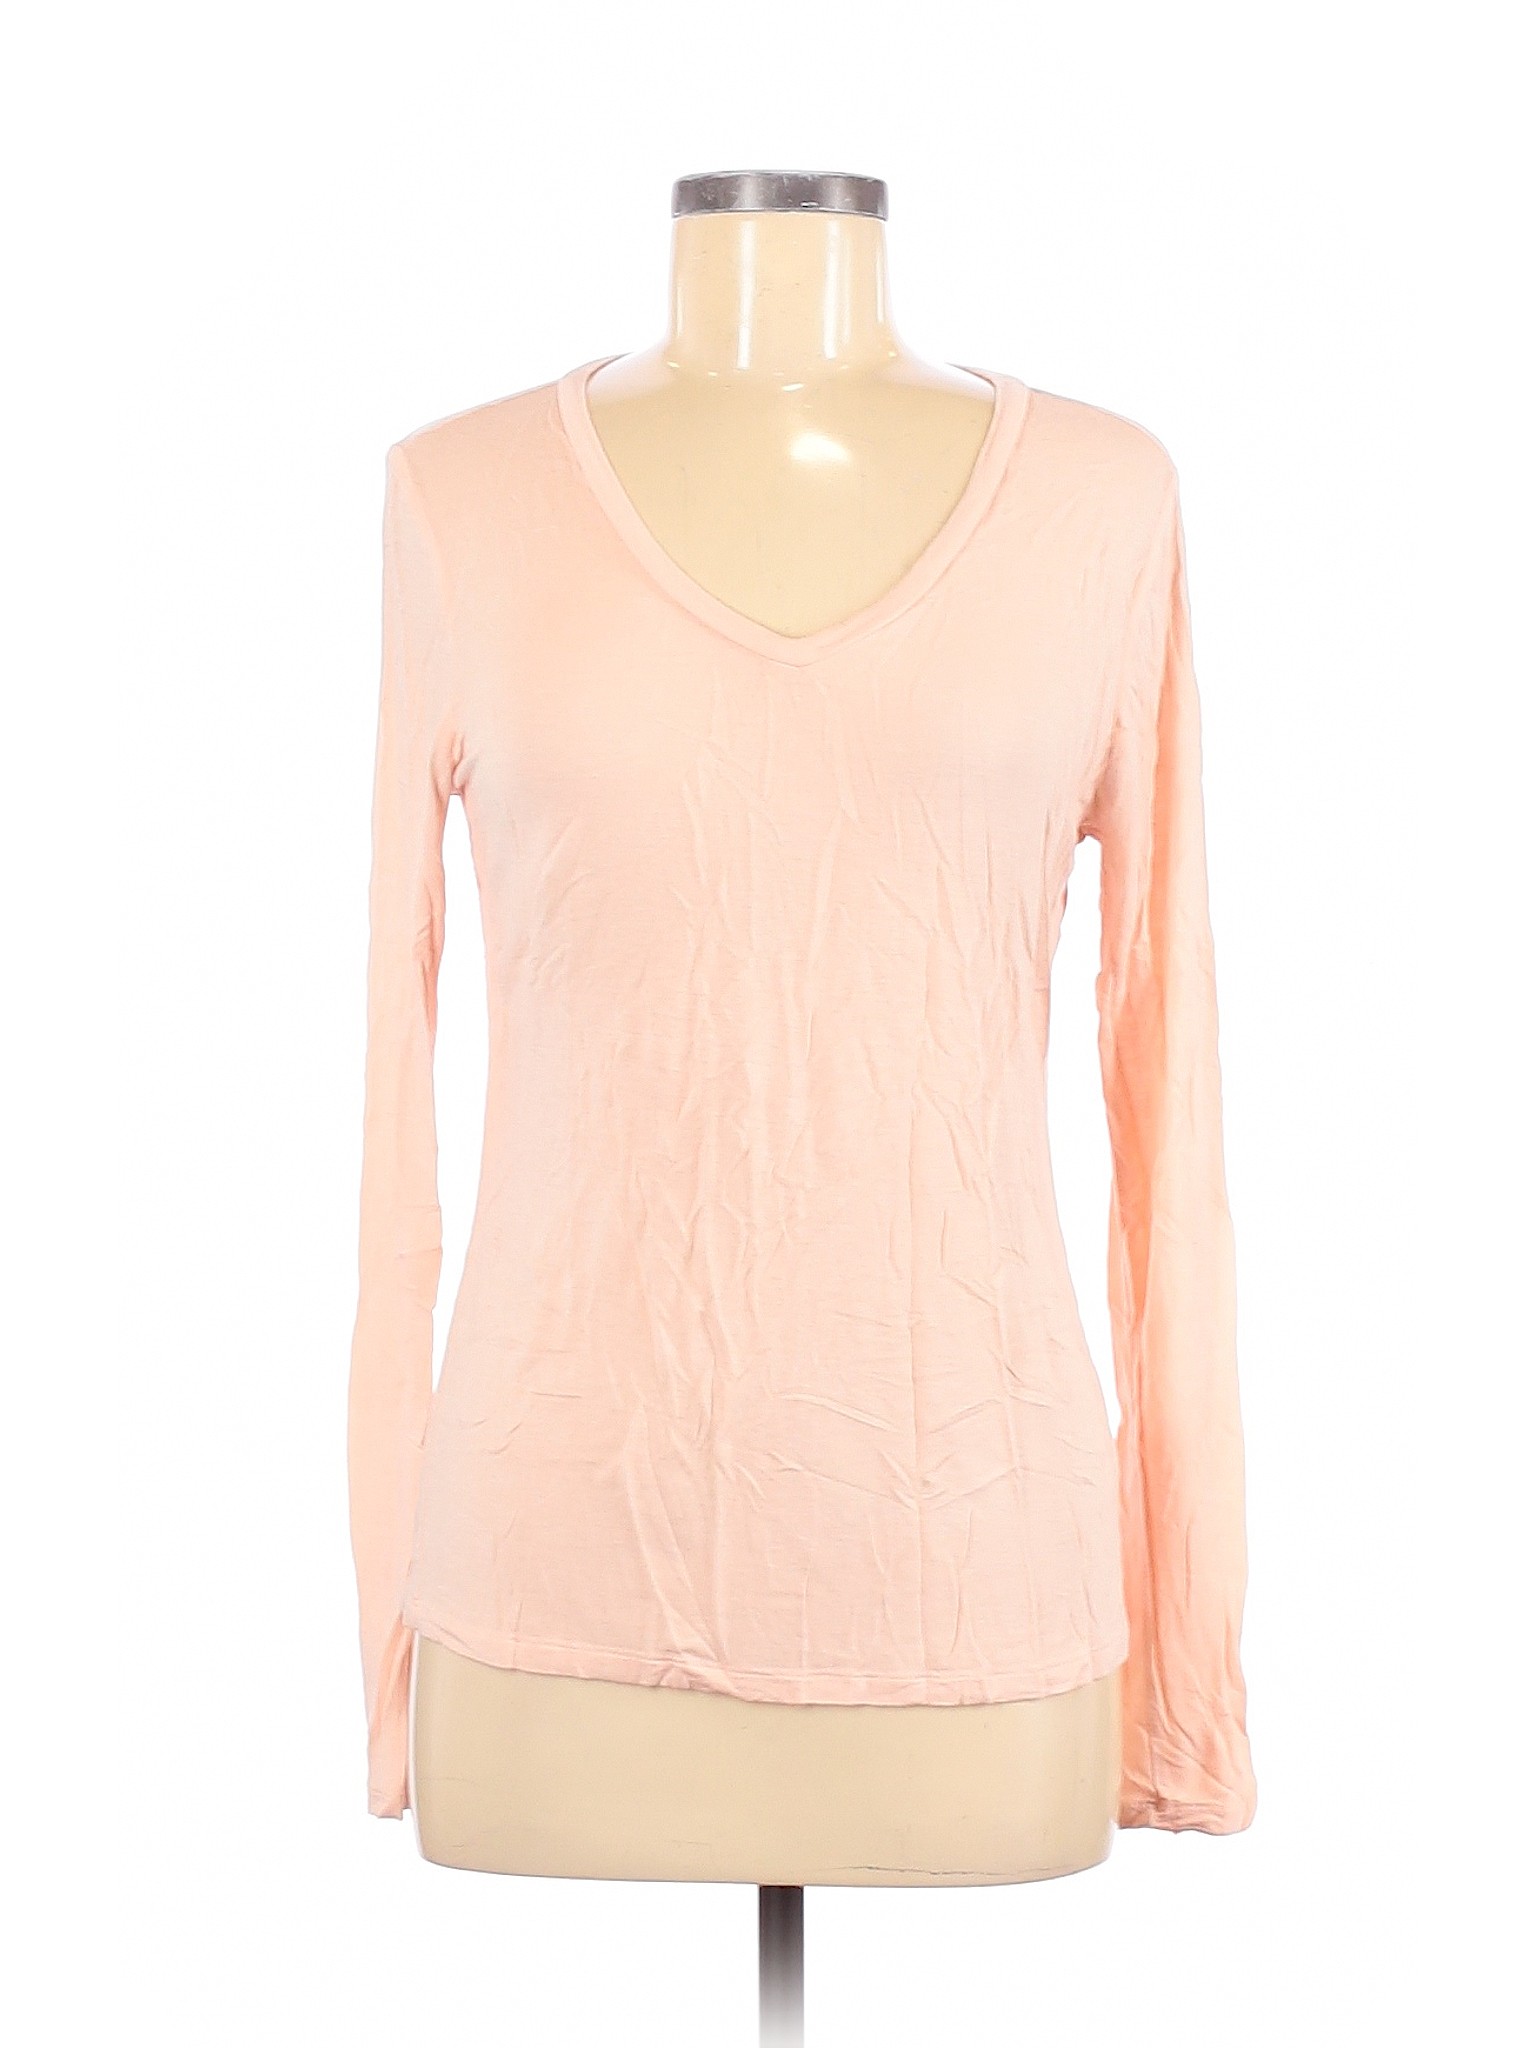 Cato Women Pink Long Sleeve T-Shirt M | eBay